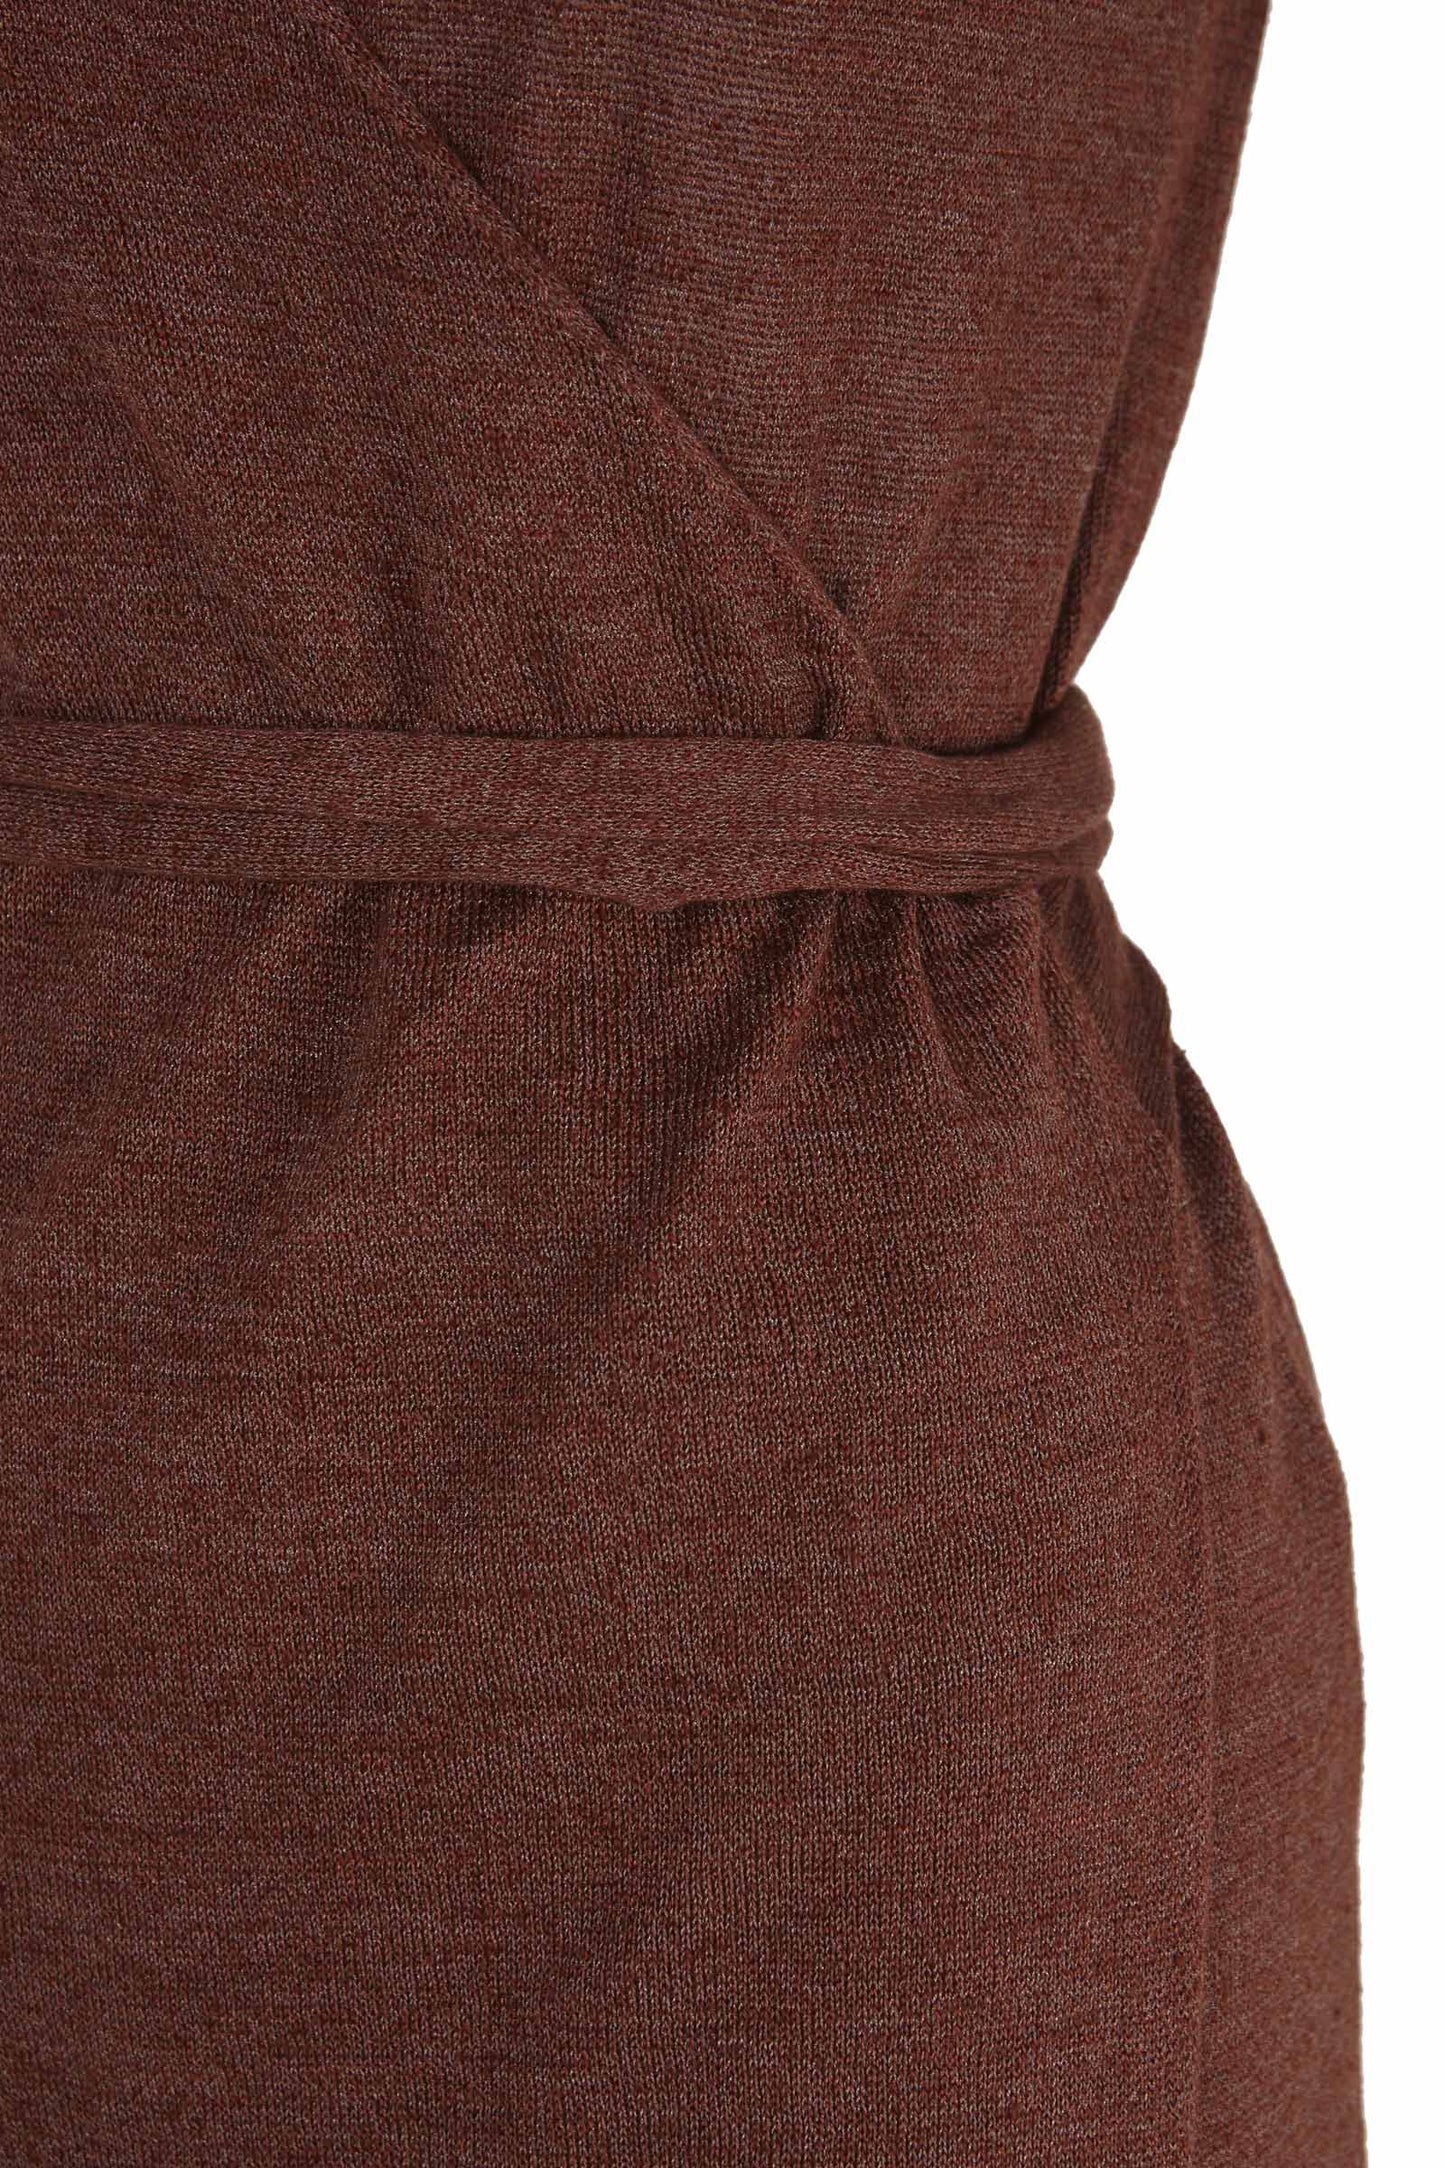 Canton, maroon knit wrap dress